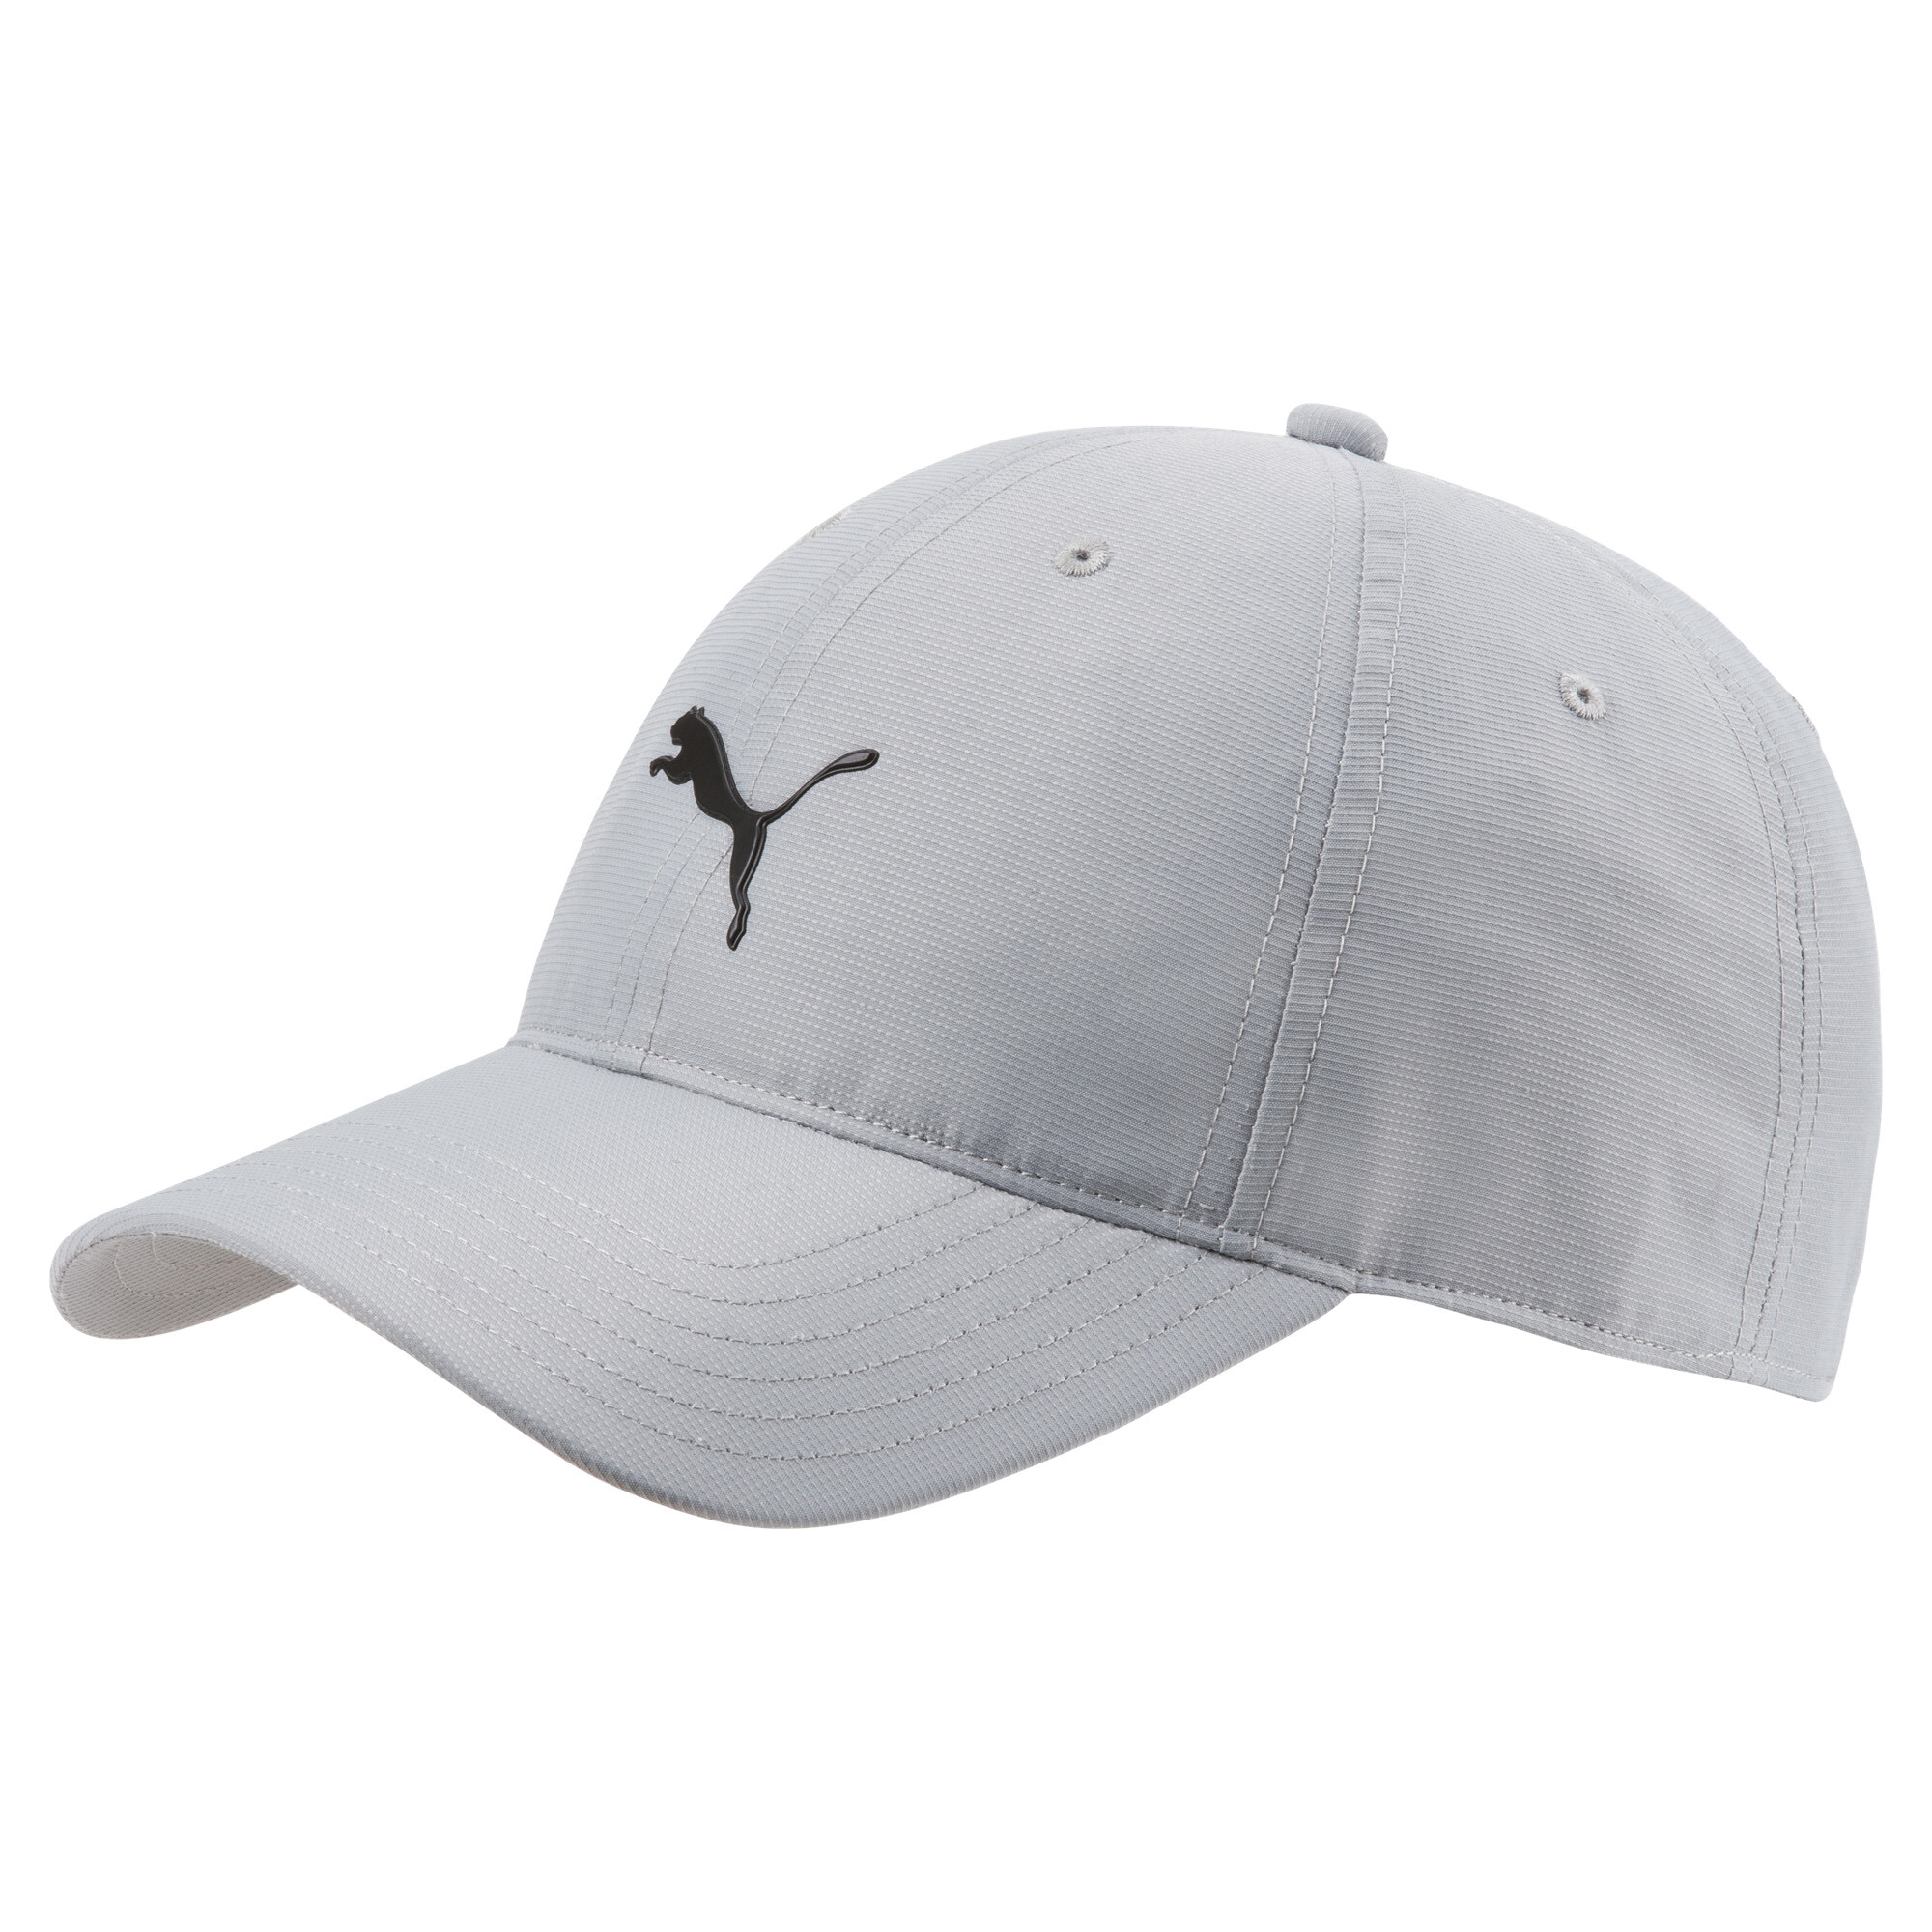 Men's Puma Golf's Pounce Adjustable Cap, Gray, Accessories